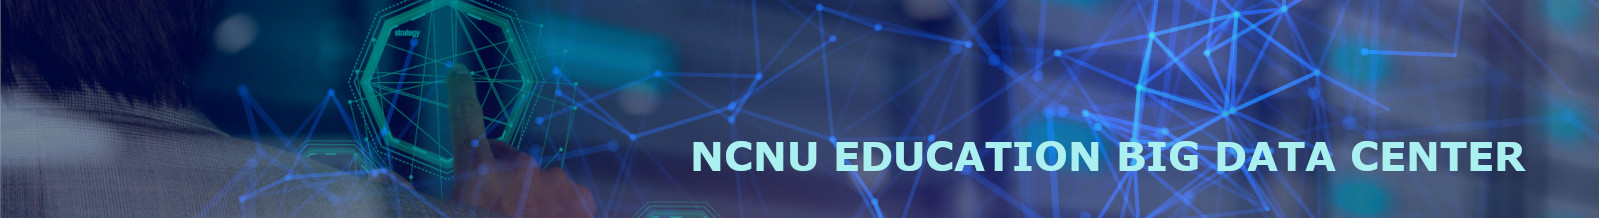 NCNU EDUCATION BIG DATA CENTER